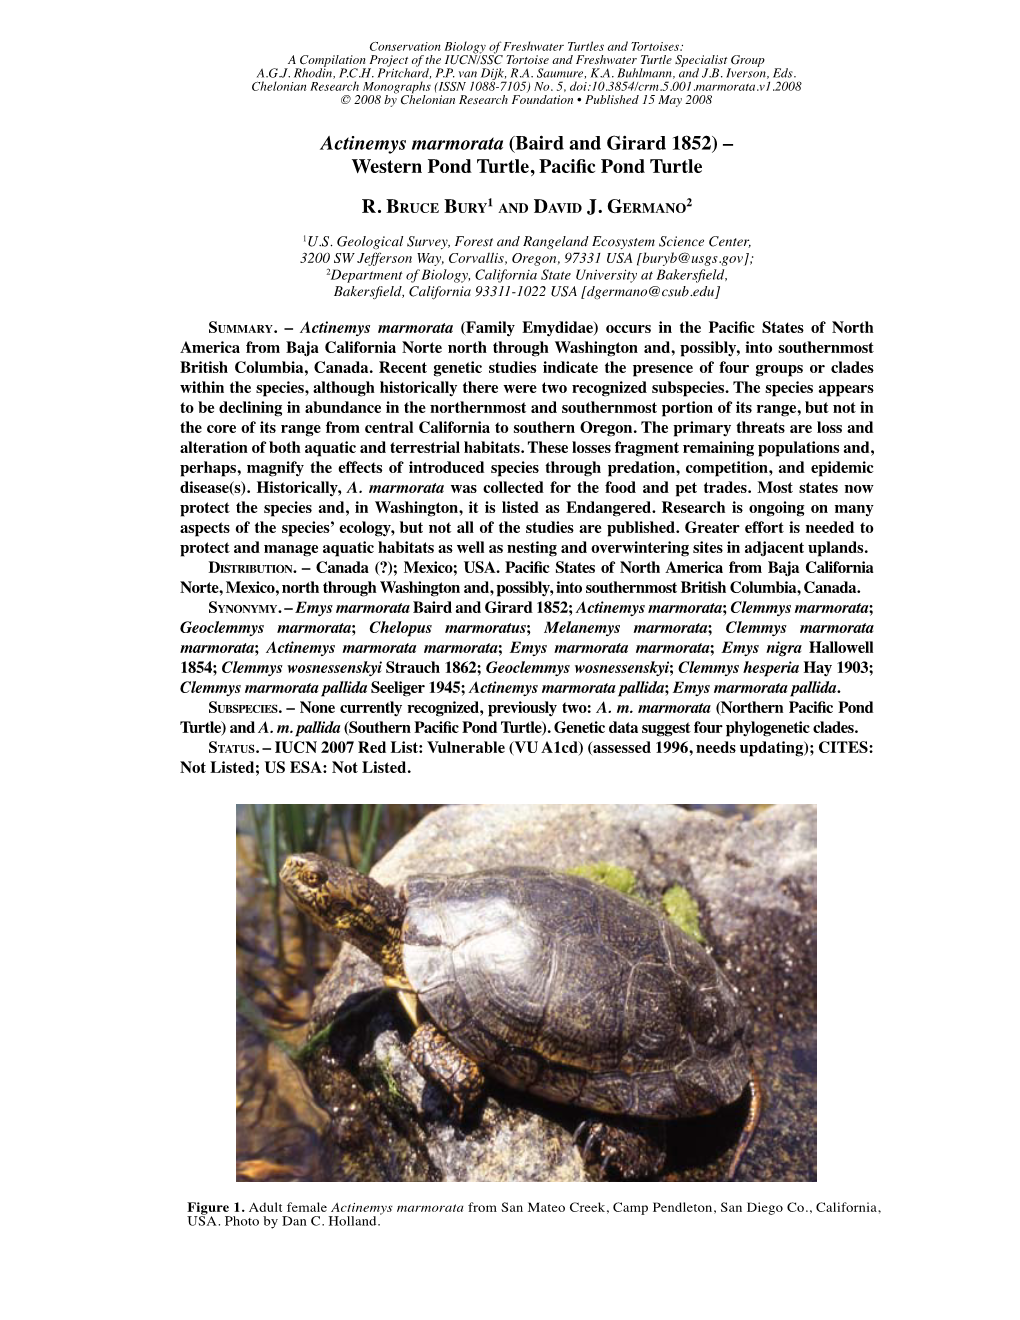 Actinemys Marmorata (Baird and Girard 1852) – Western Pond Turtle, Pacific Pond Turtle